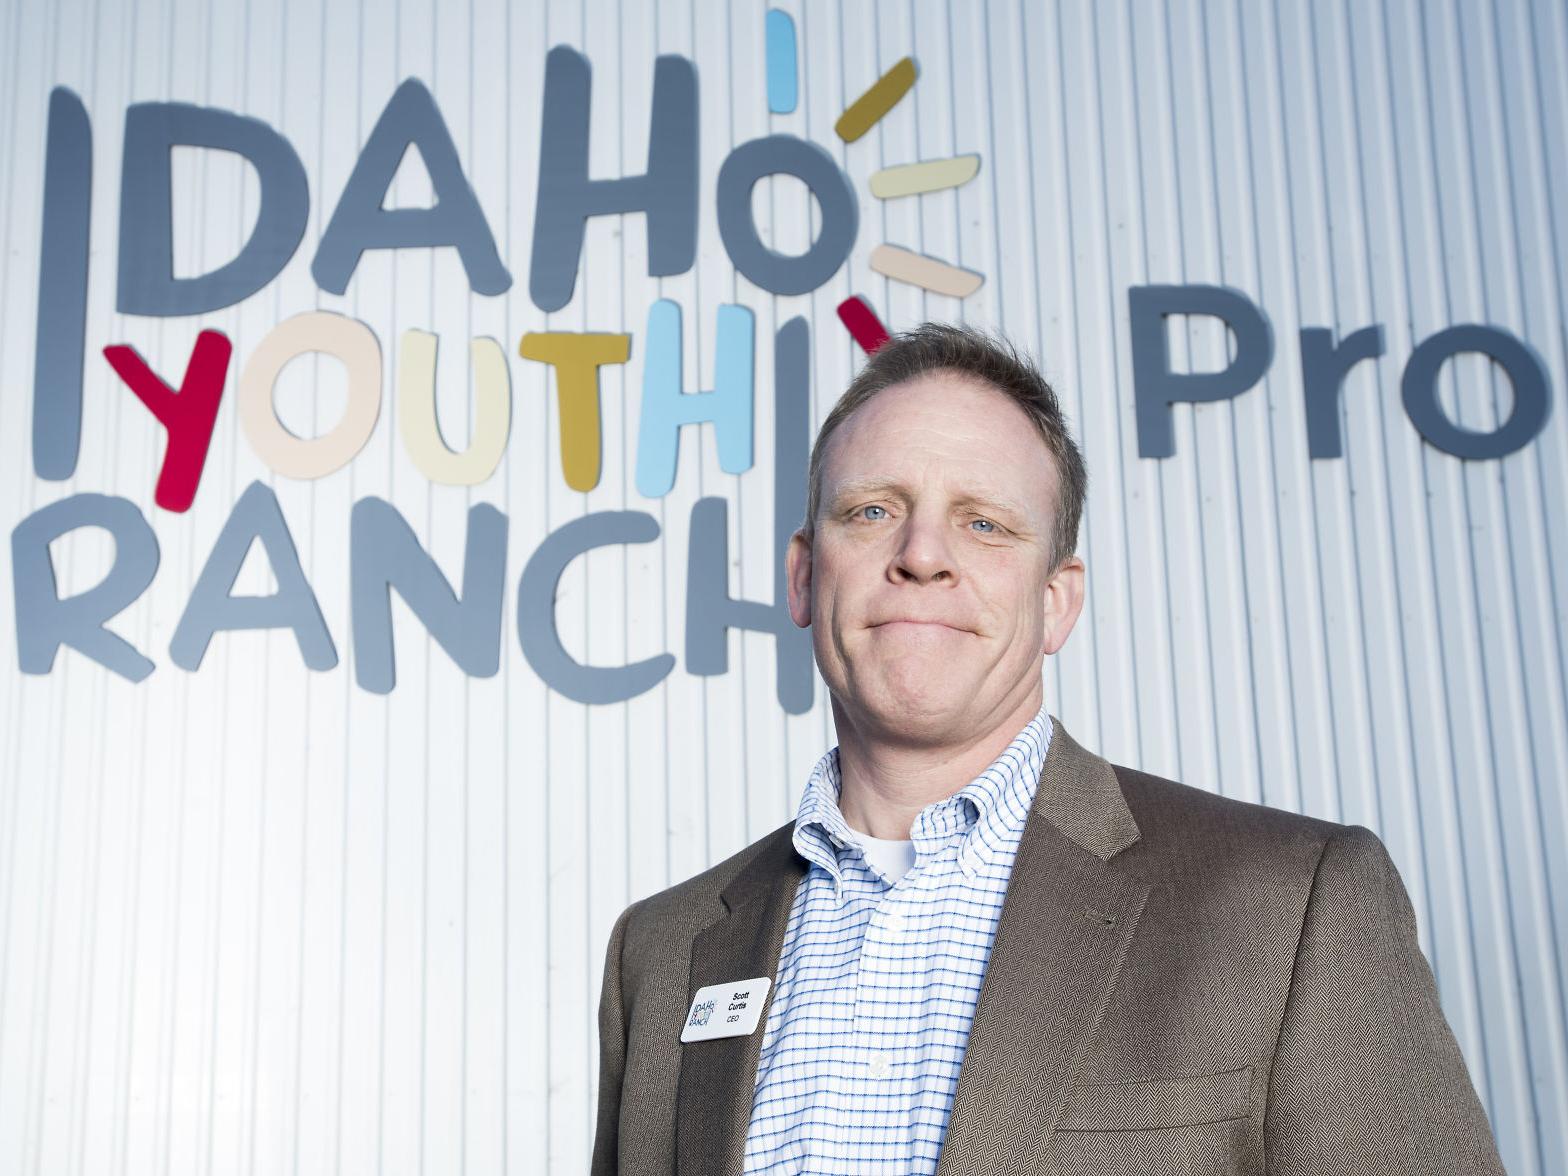 Idaho Youth Ranch and WCA announce partnership